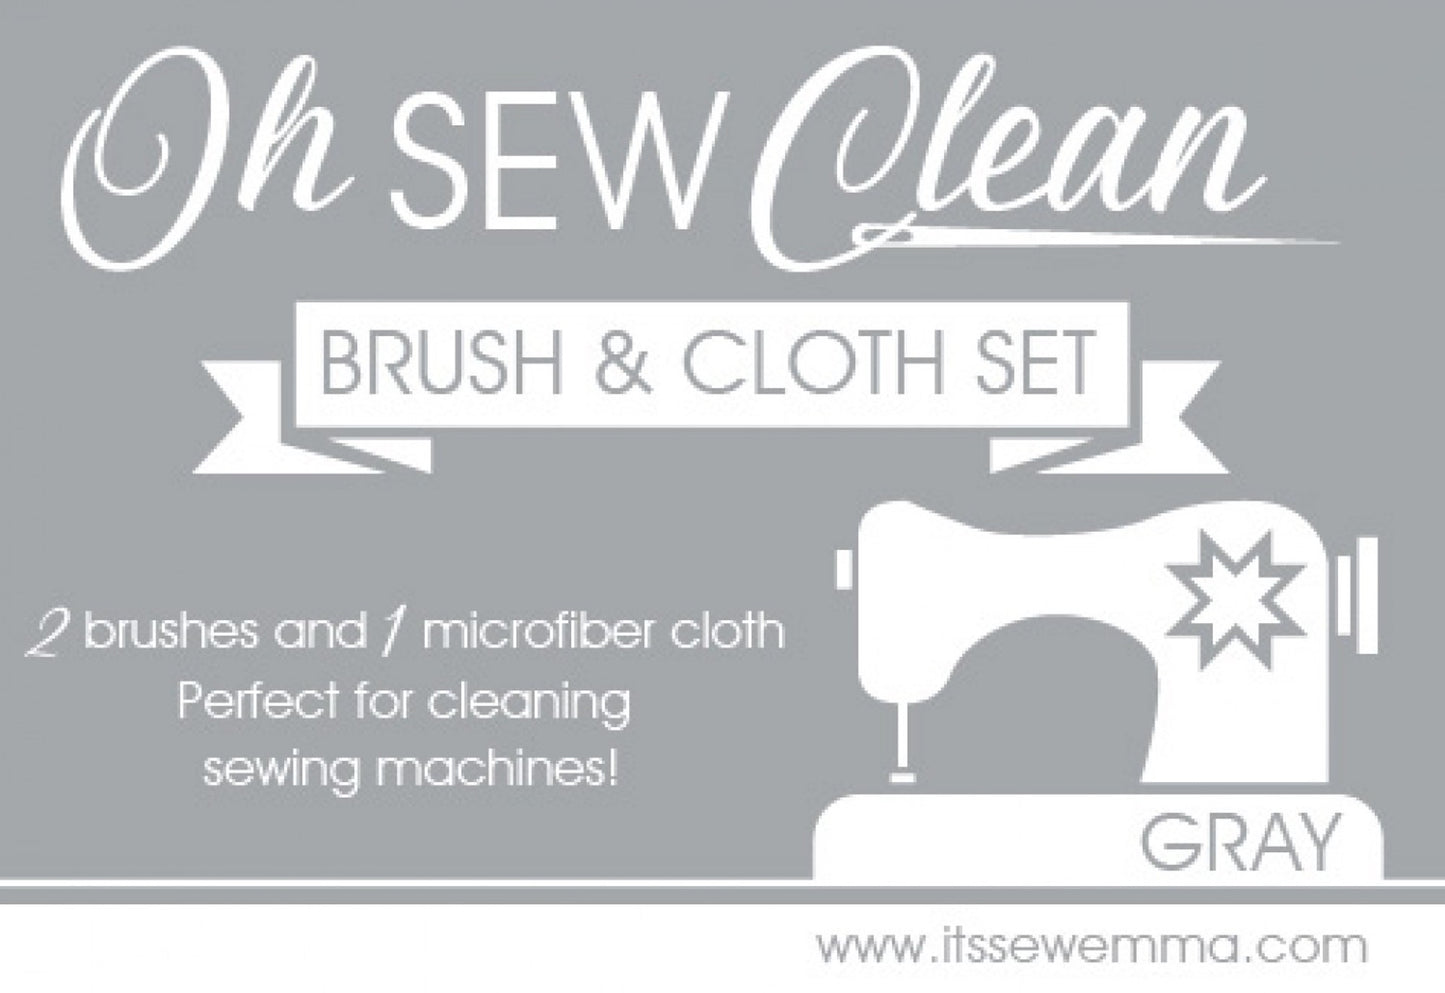 Oh Sew Clean Brush & Cloth Set- Gray